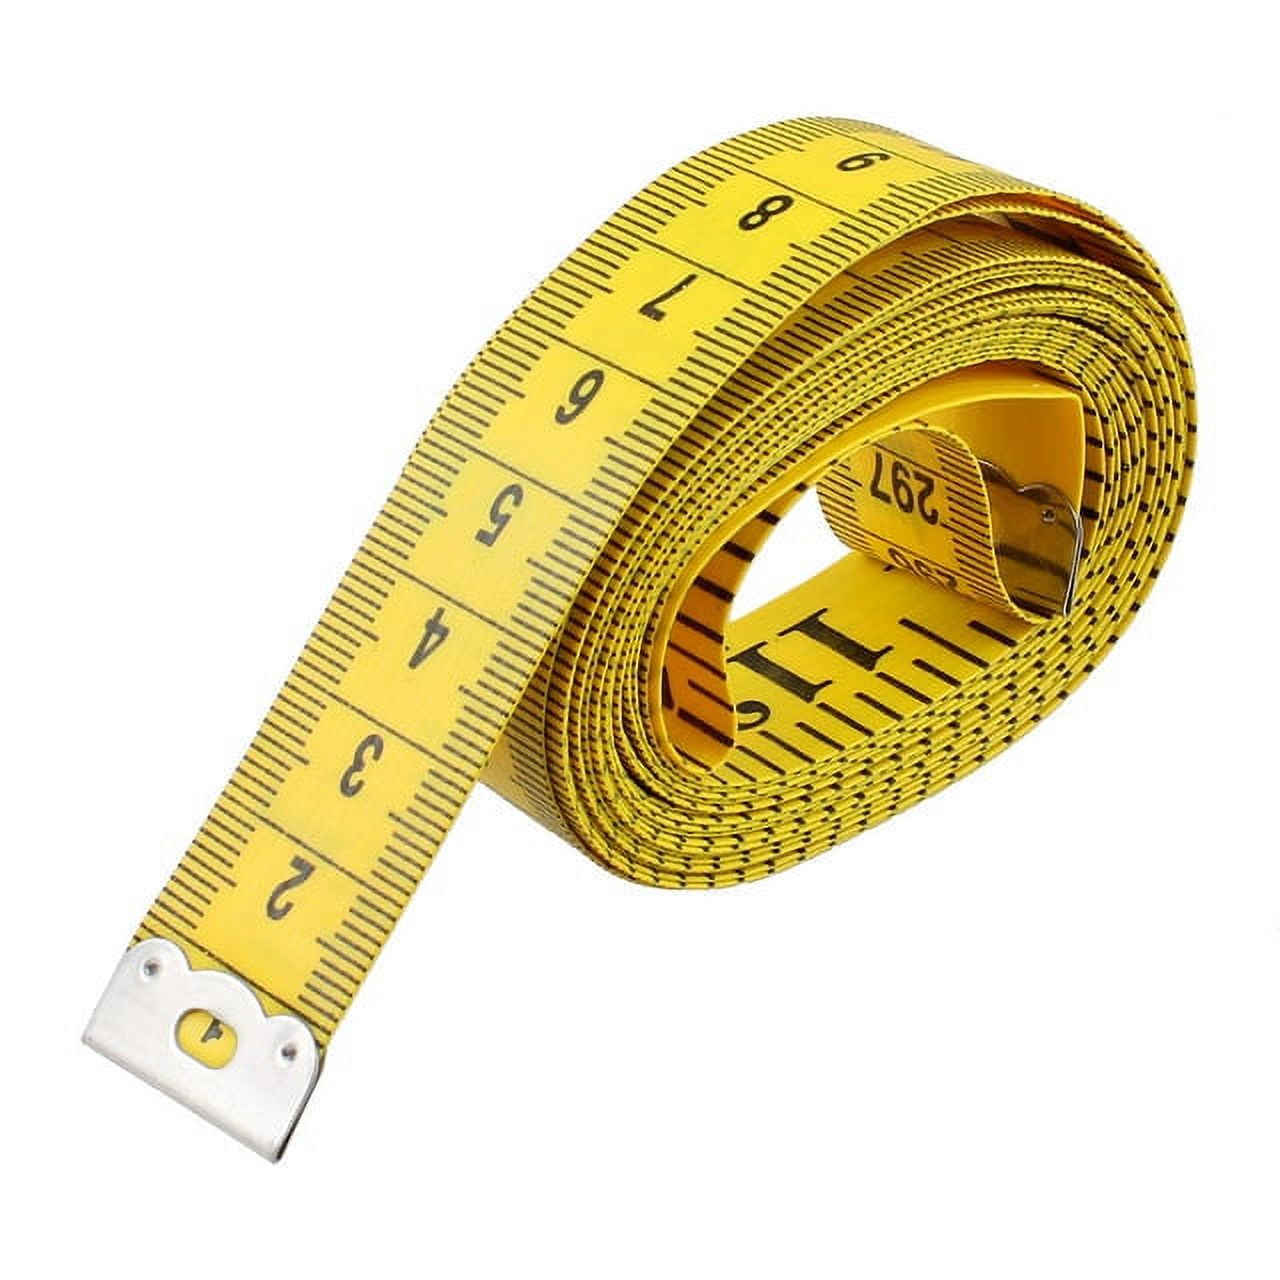 1PCS Useful Body Measuring Ruler Sewing Tailor Tape Measure Soft 300cm  Sewing Ruler 120 Inch Meter Sewing Measuring Tools - AliExpress